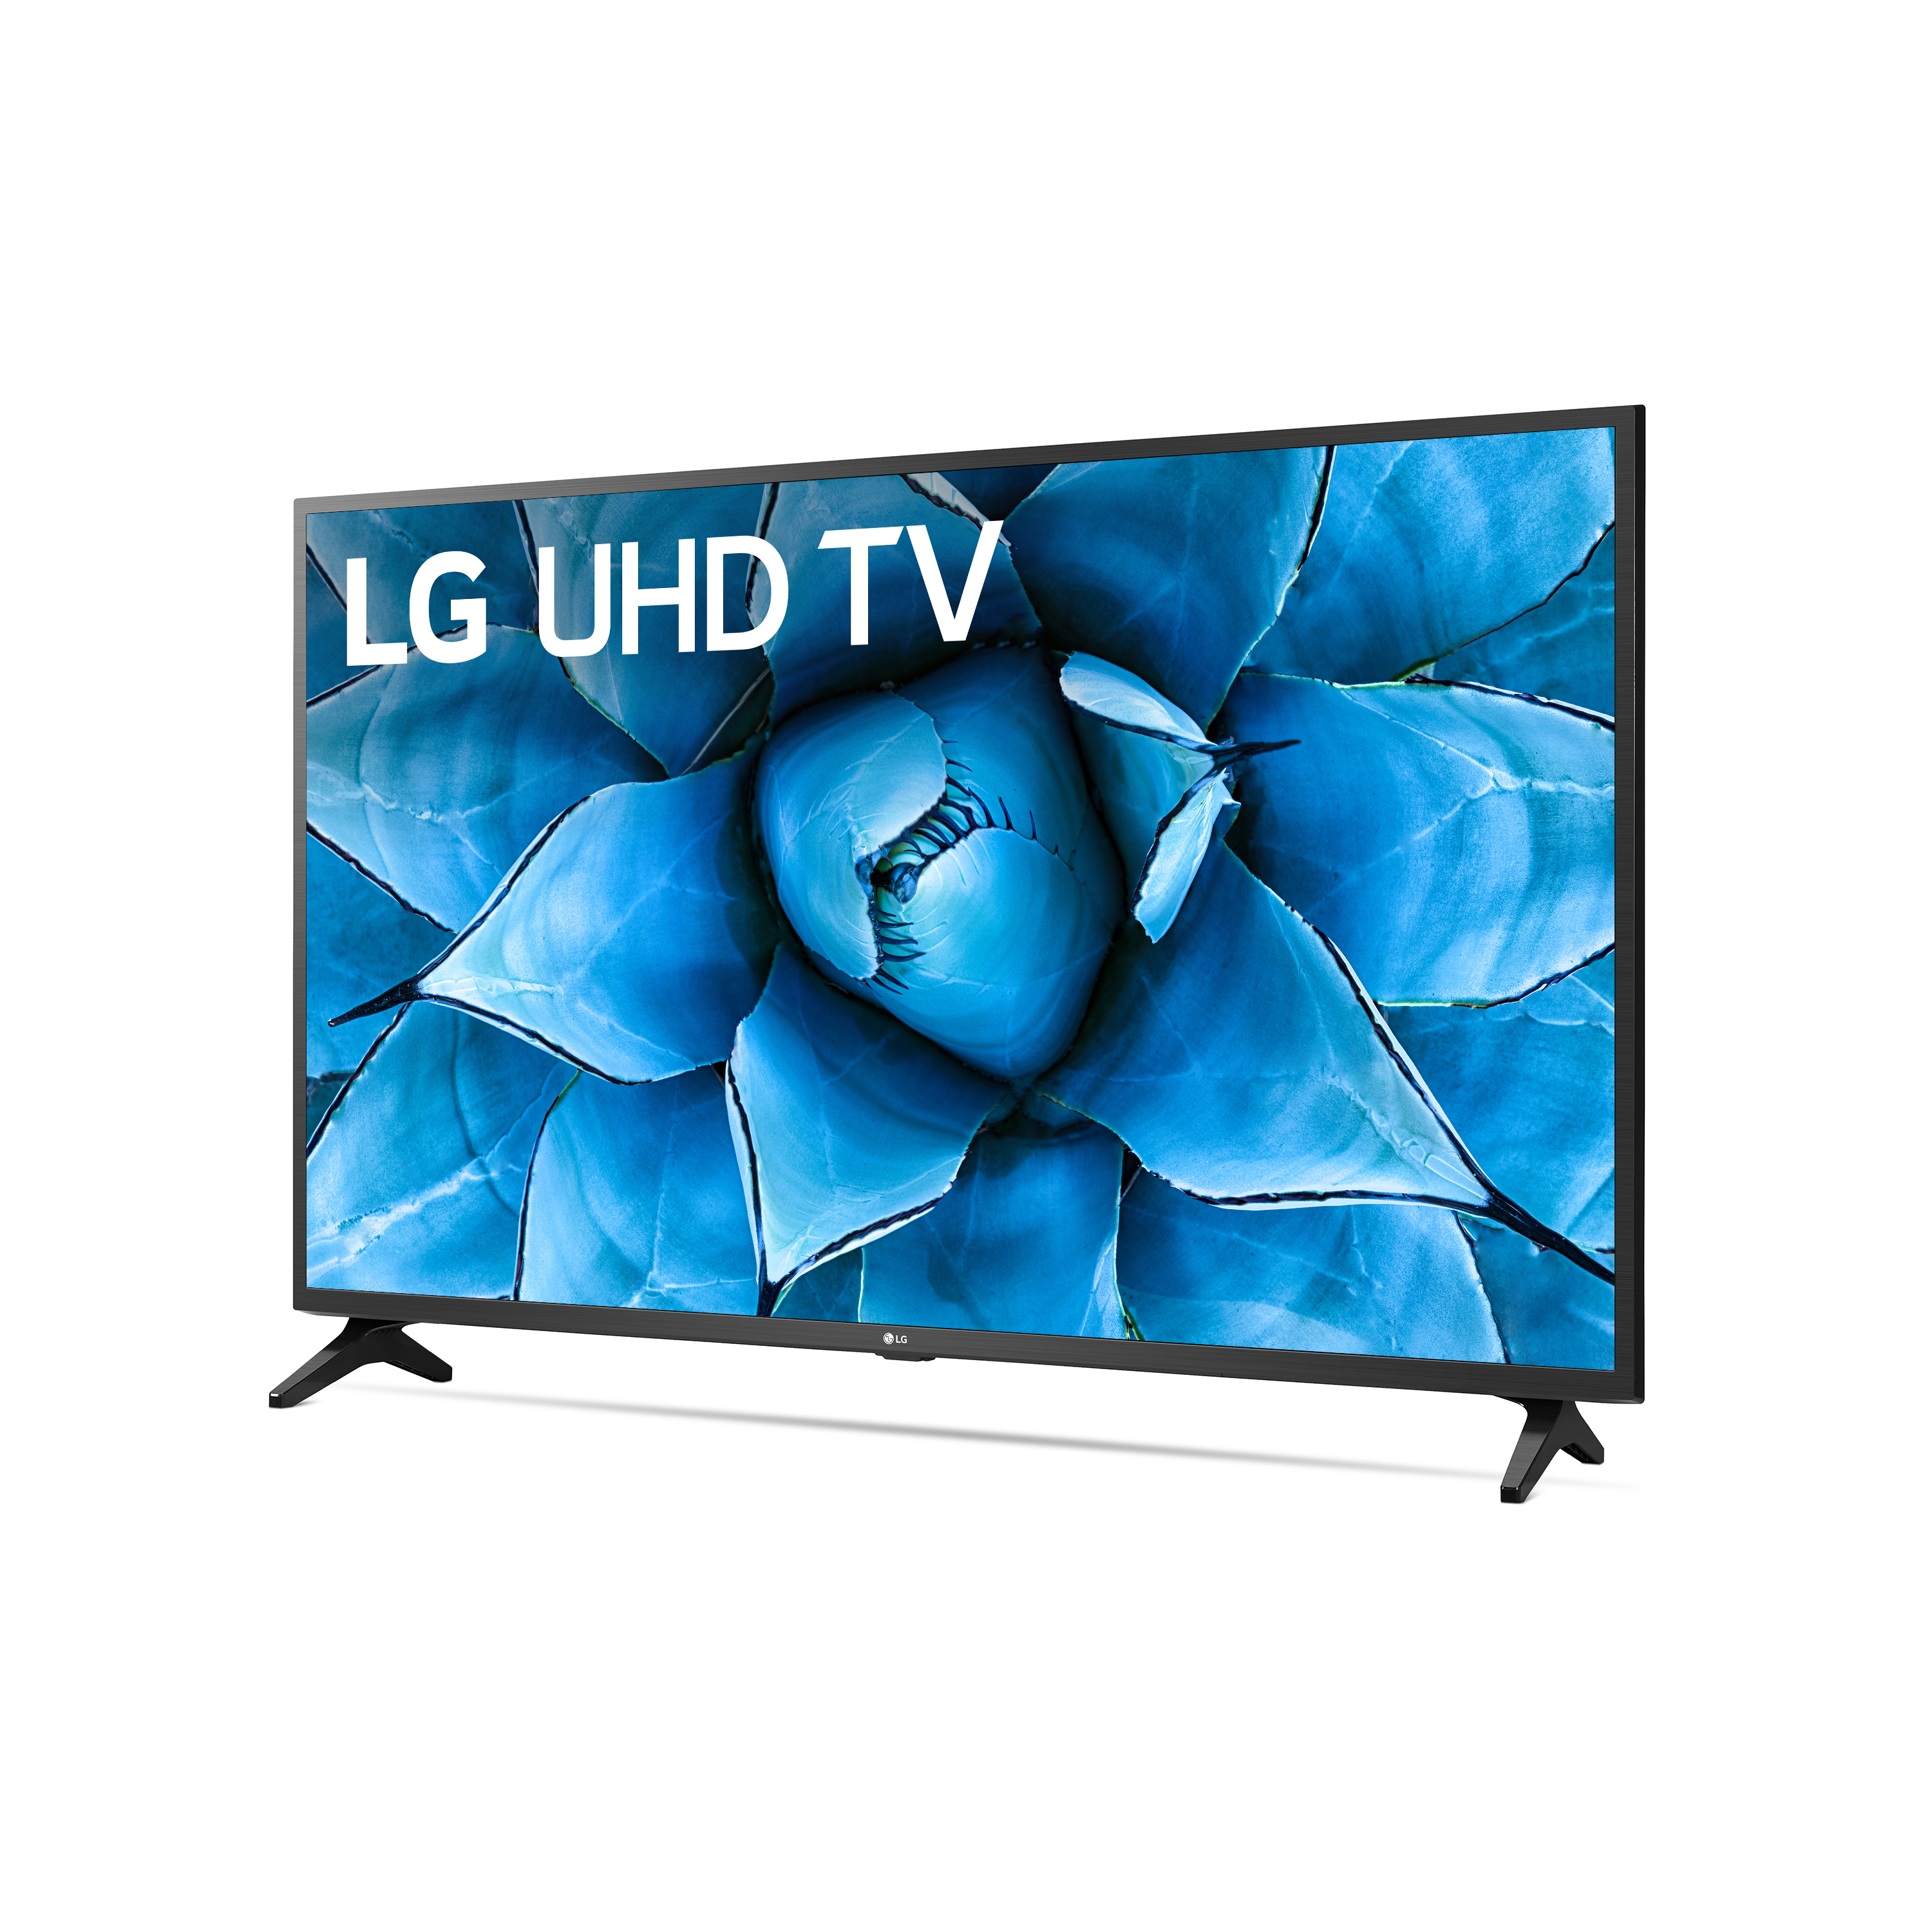 LG 65" Class 4K UHD 2160P Smart TV 65UN7300PUF 2020 Model - image 4 of 28